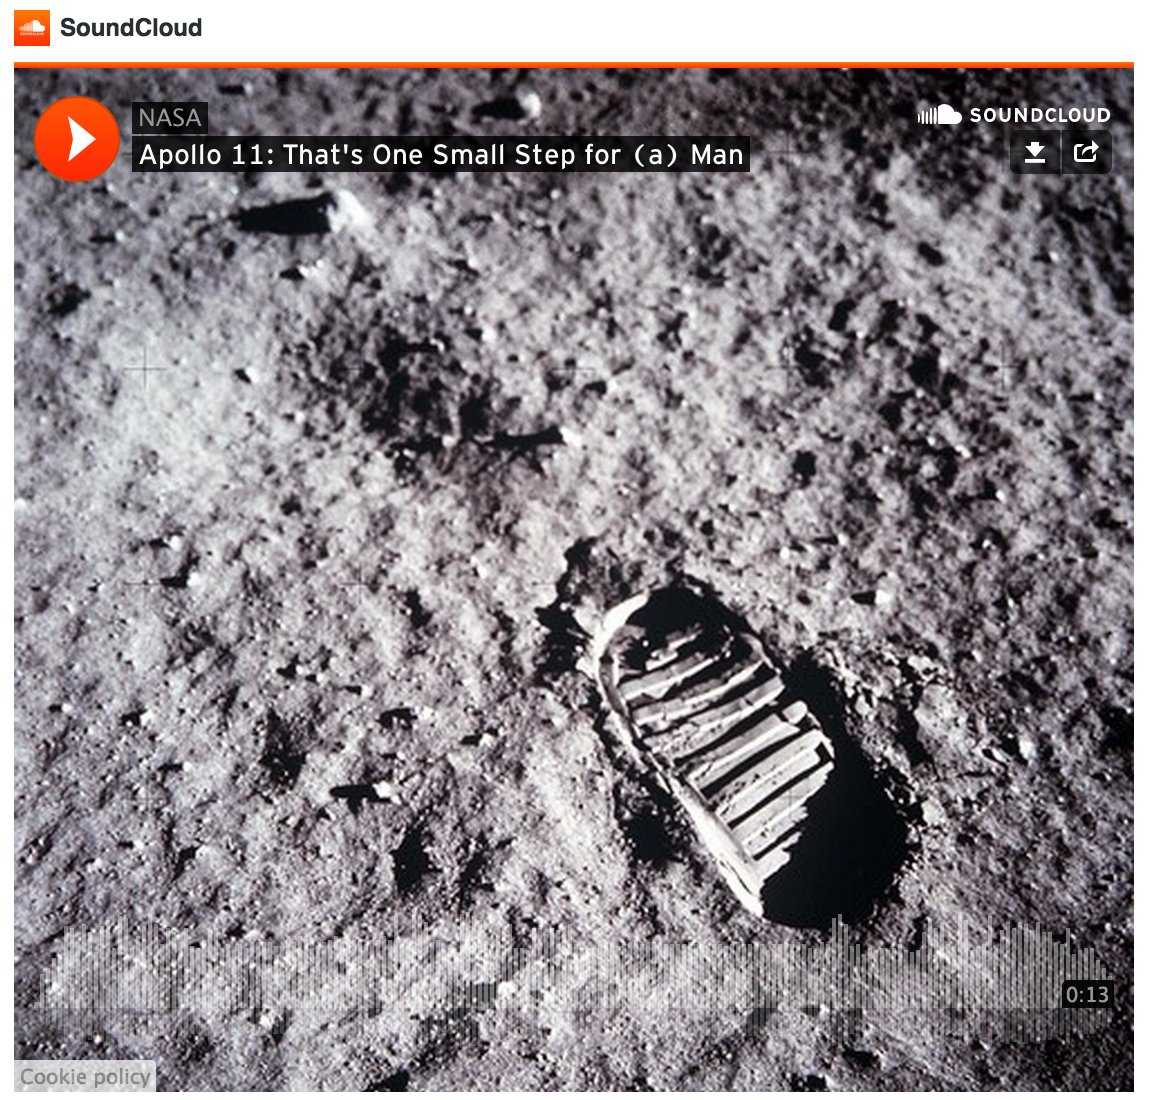 NASA on SoundCloud